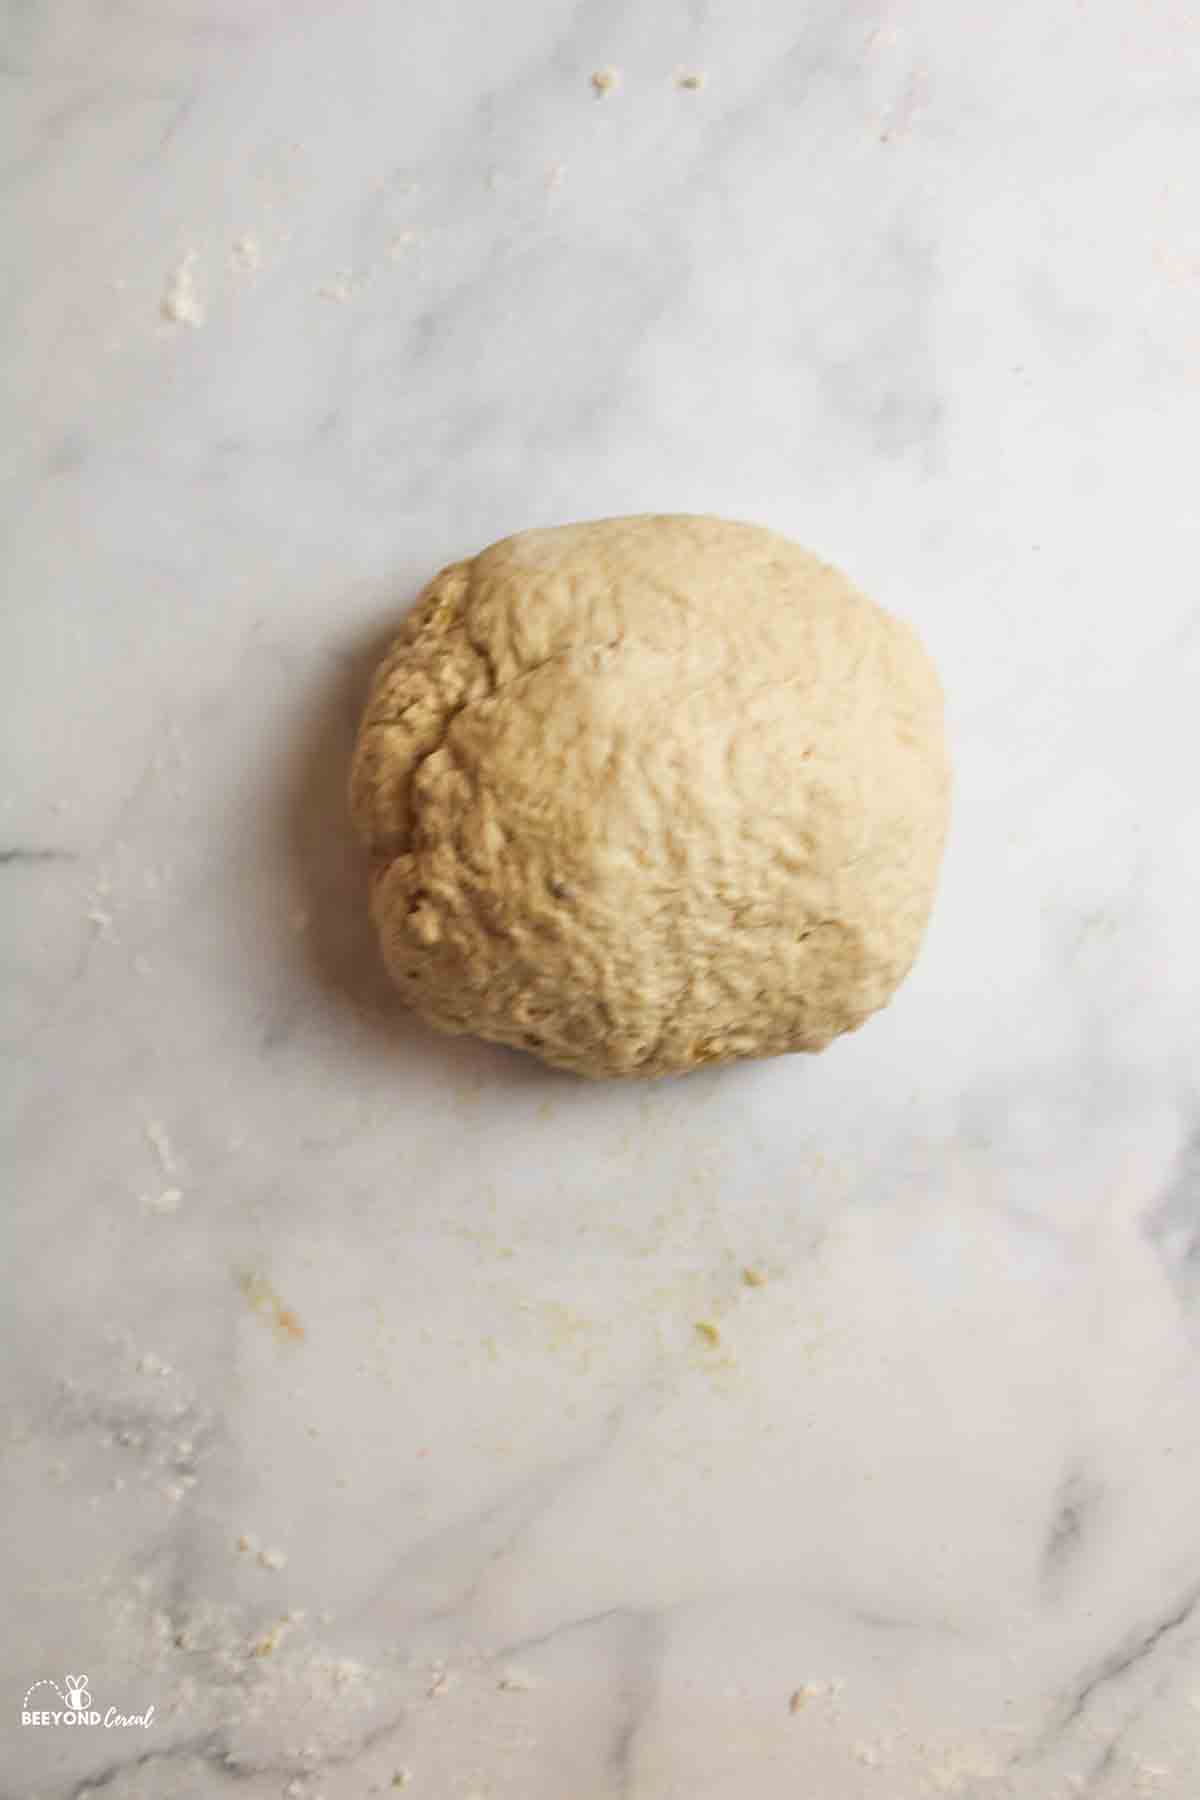 elastic ball of banana bagel dough on a counter